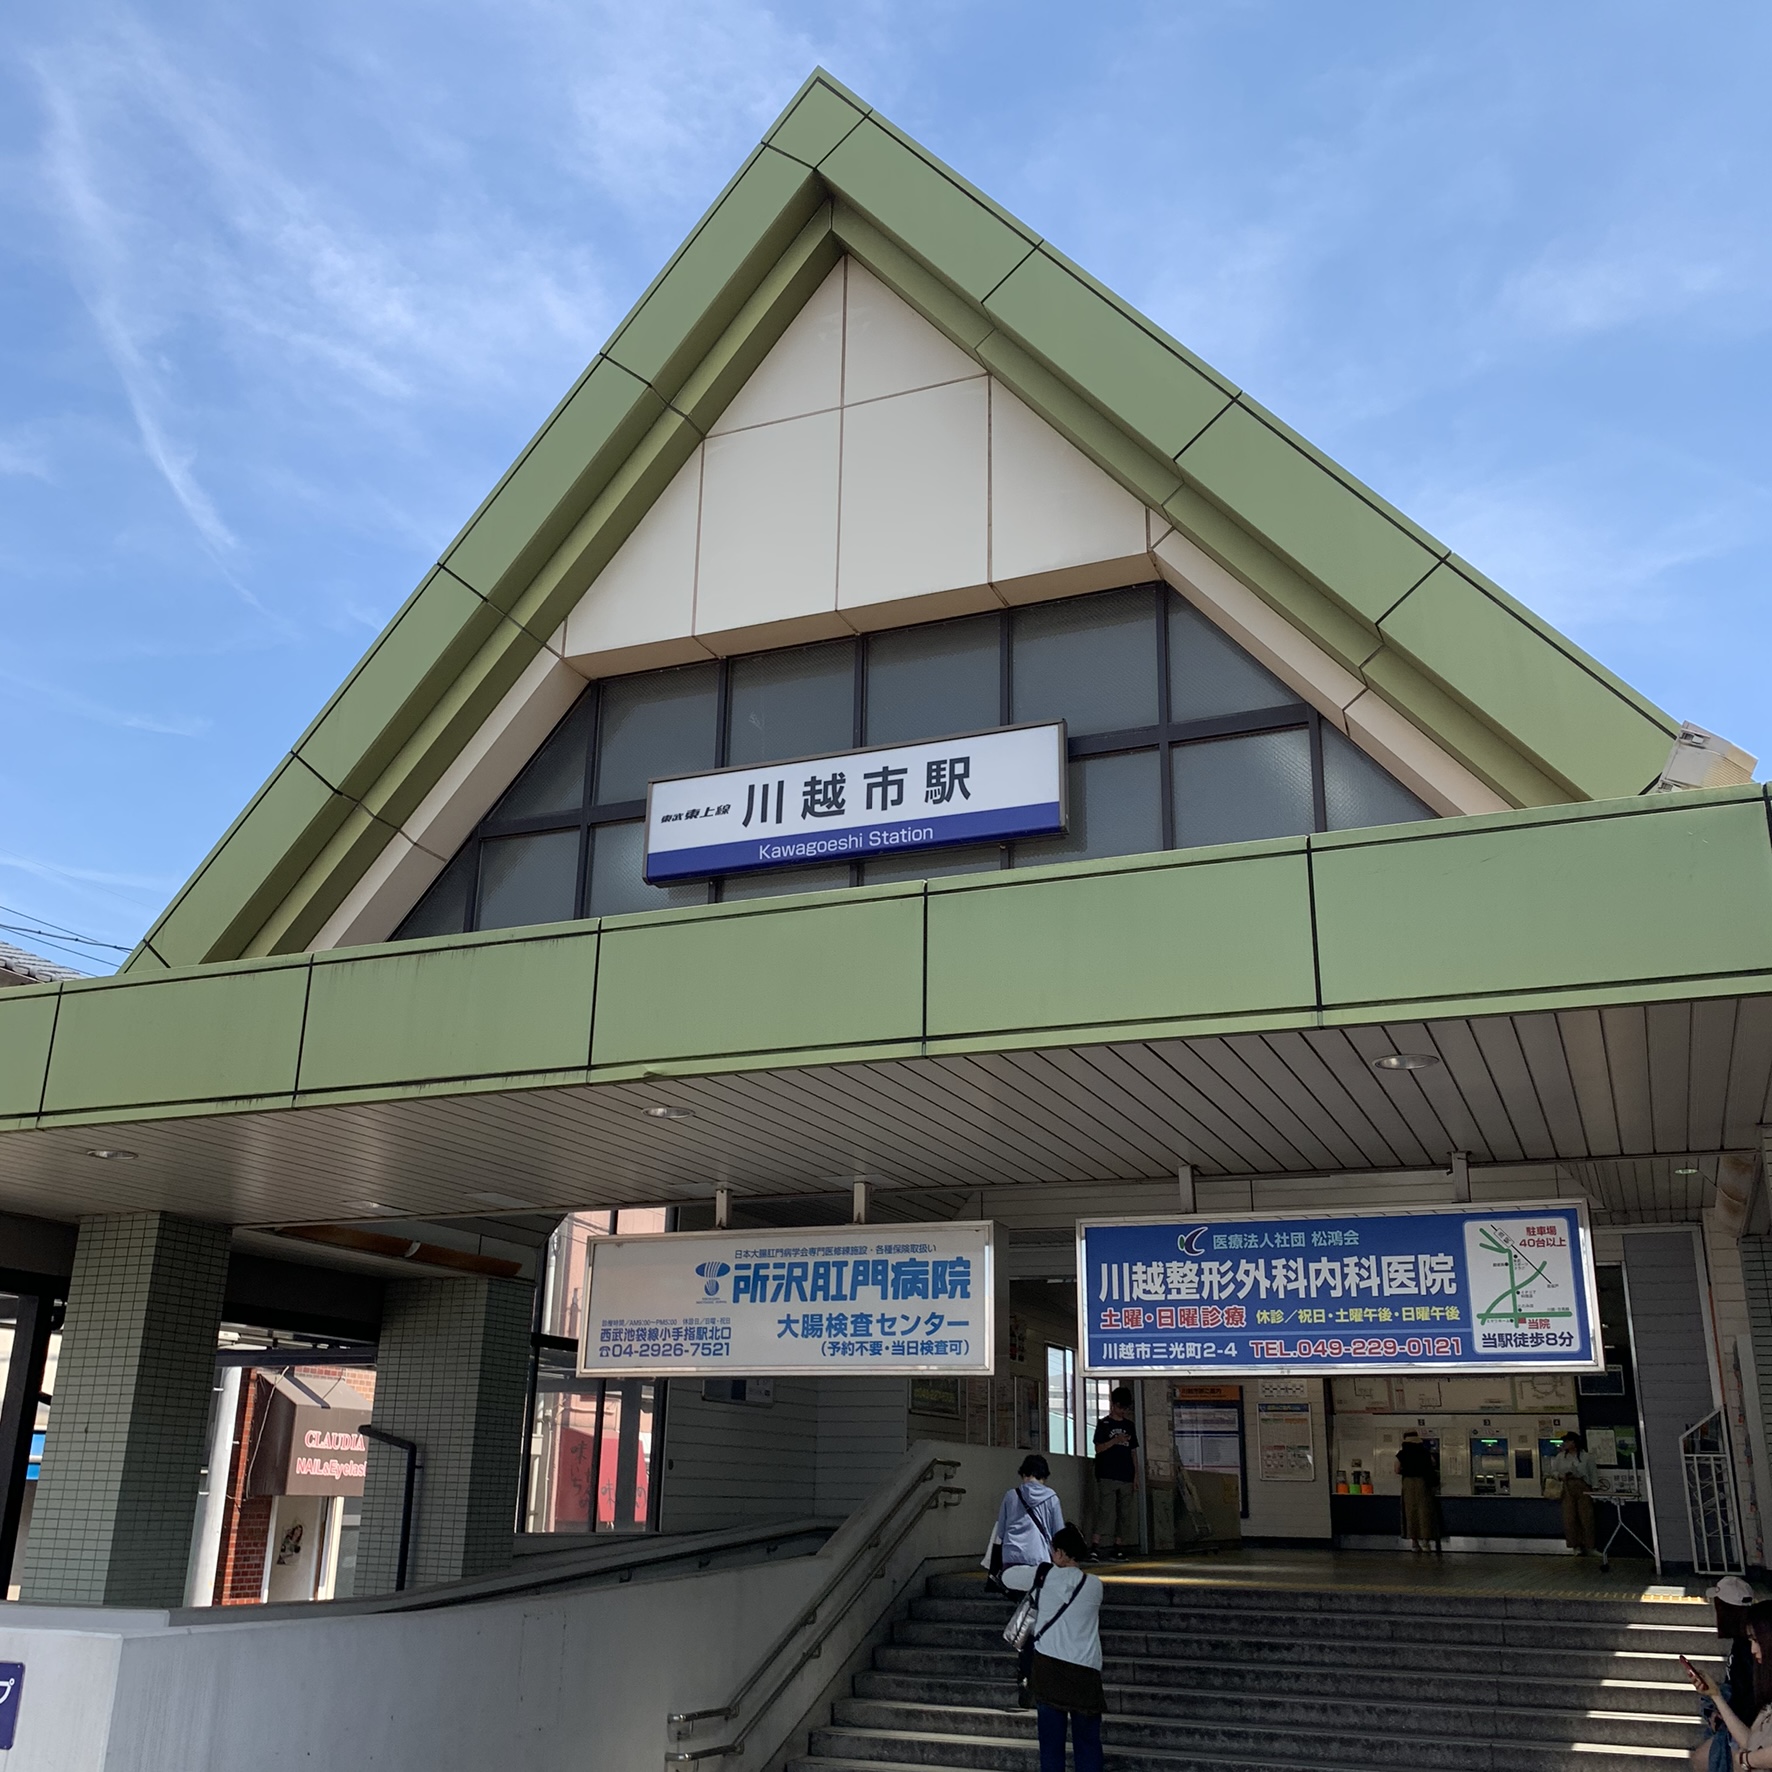 Kawagoe-shi station